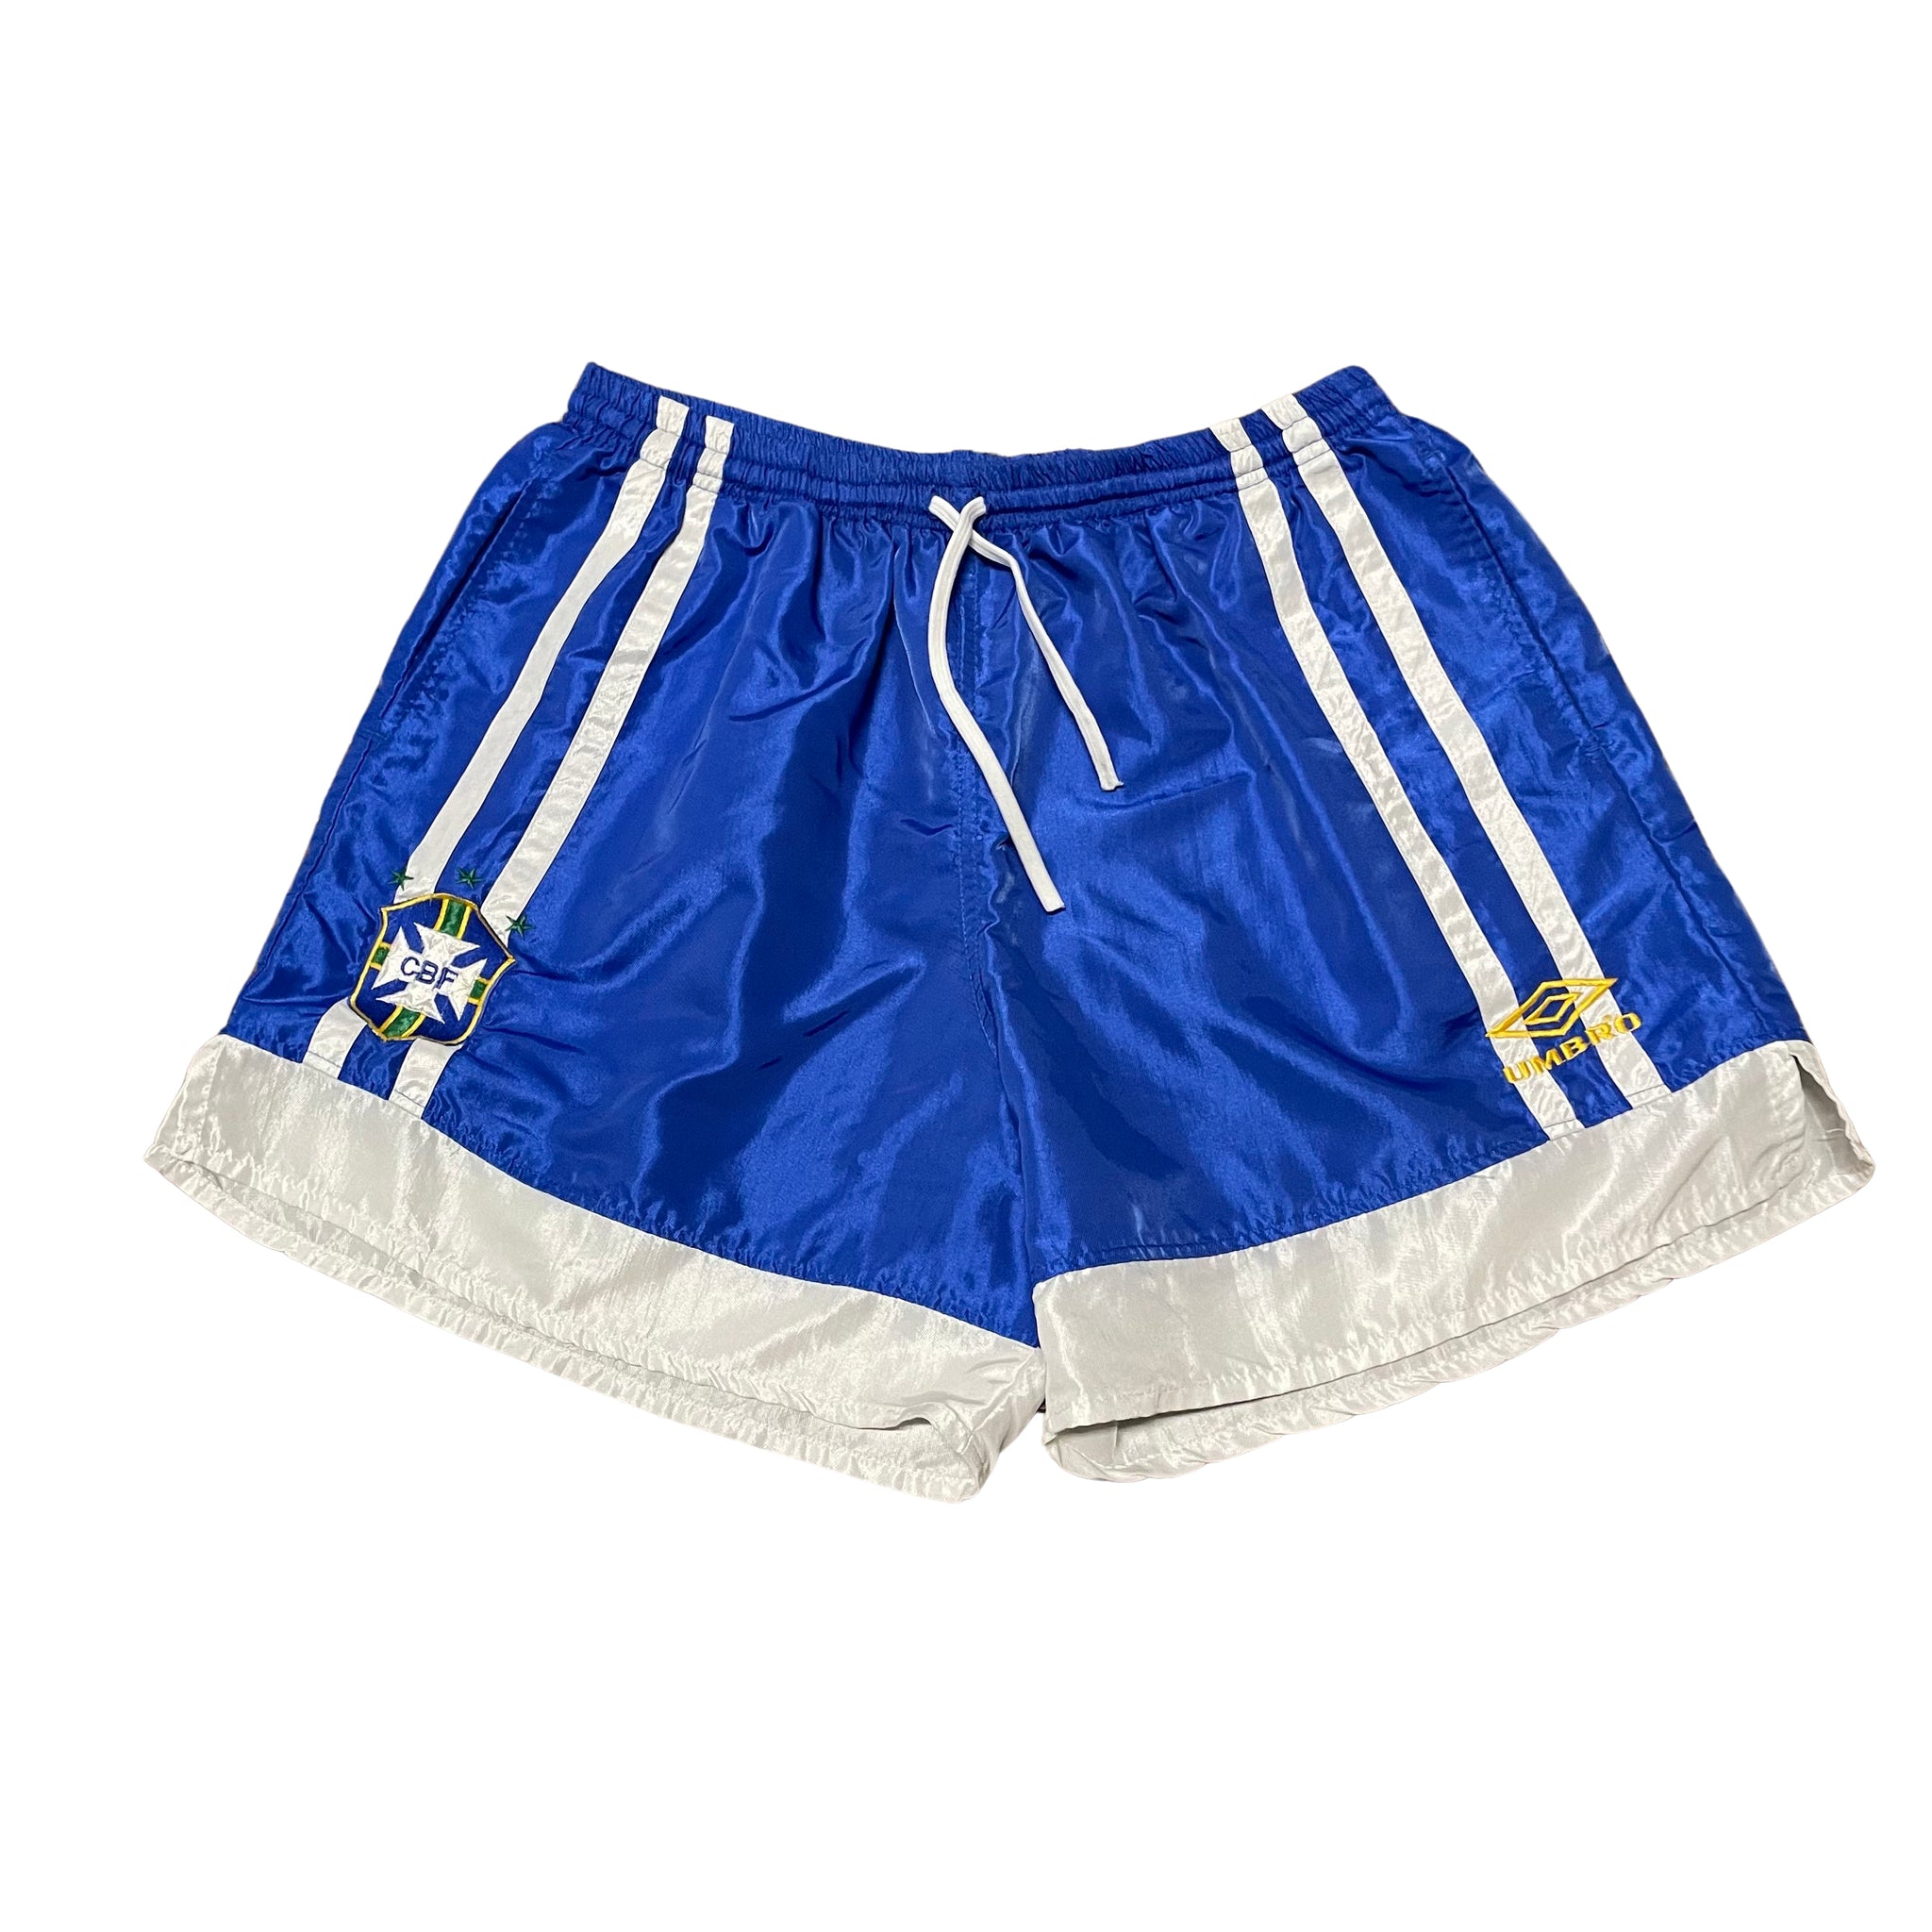 Umbro Brasil Shorts - L